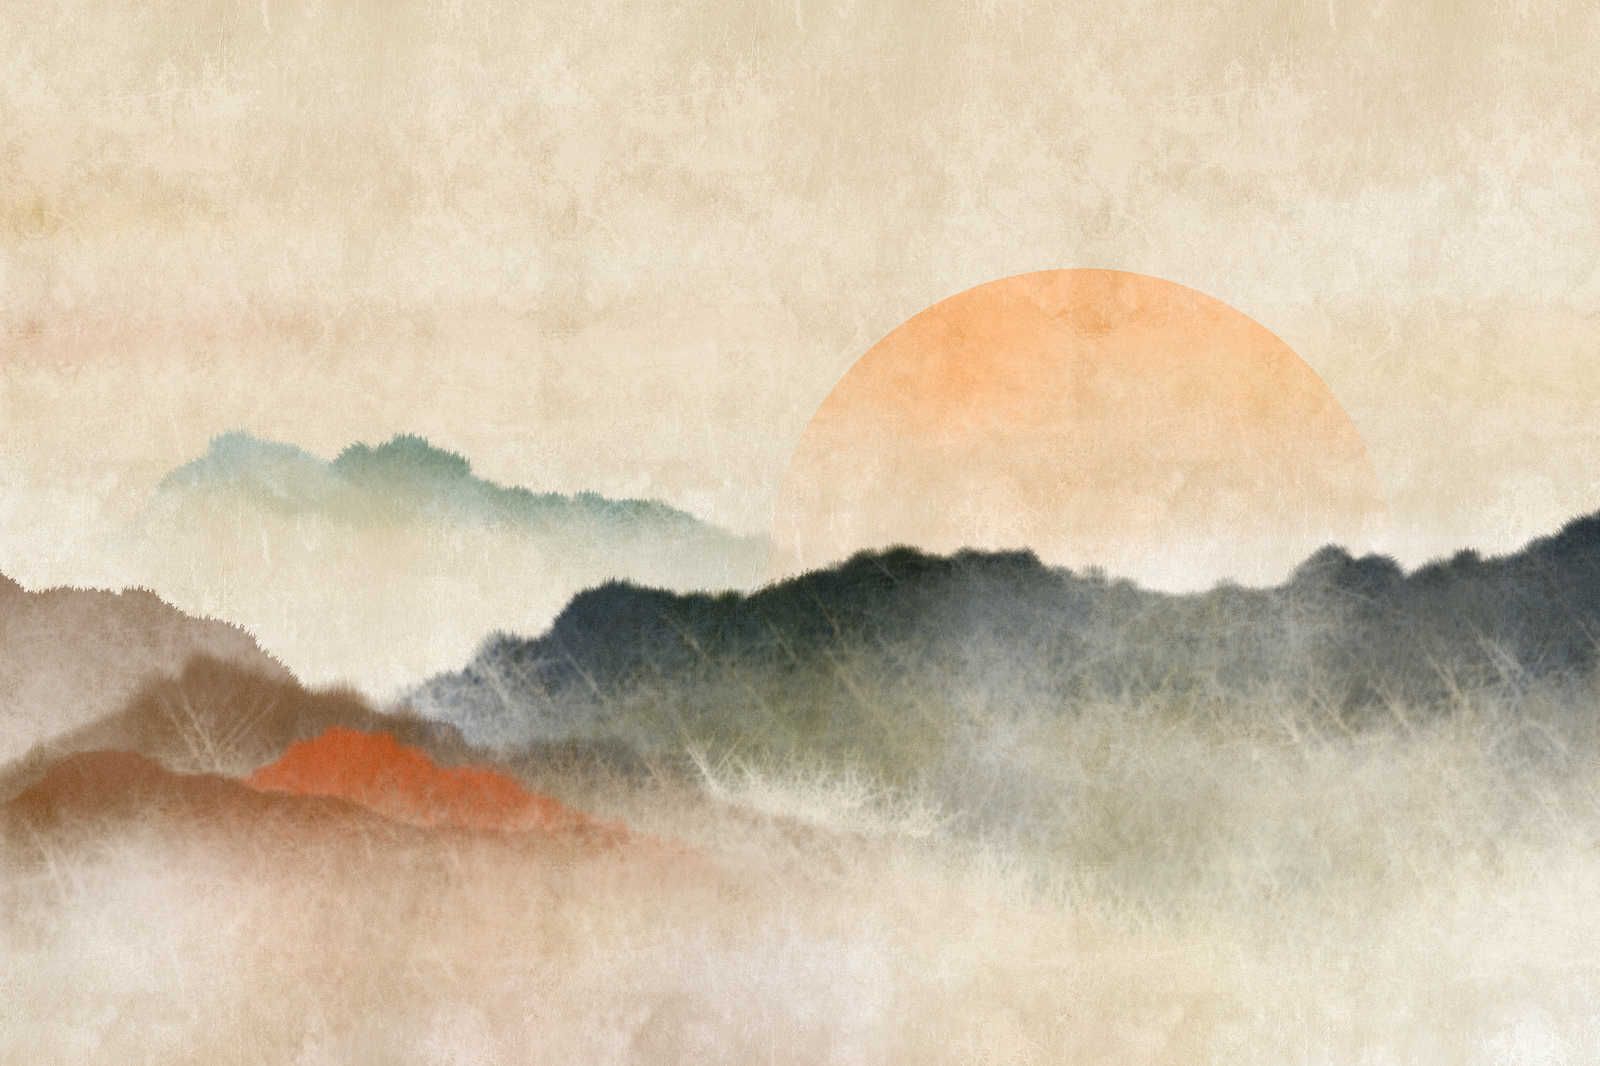             Akaishi 3 - Canvas schilderij Sunrise, Asia Style Art Print - 1.20 m x 0.80 m
        